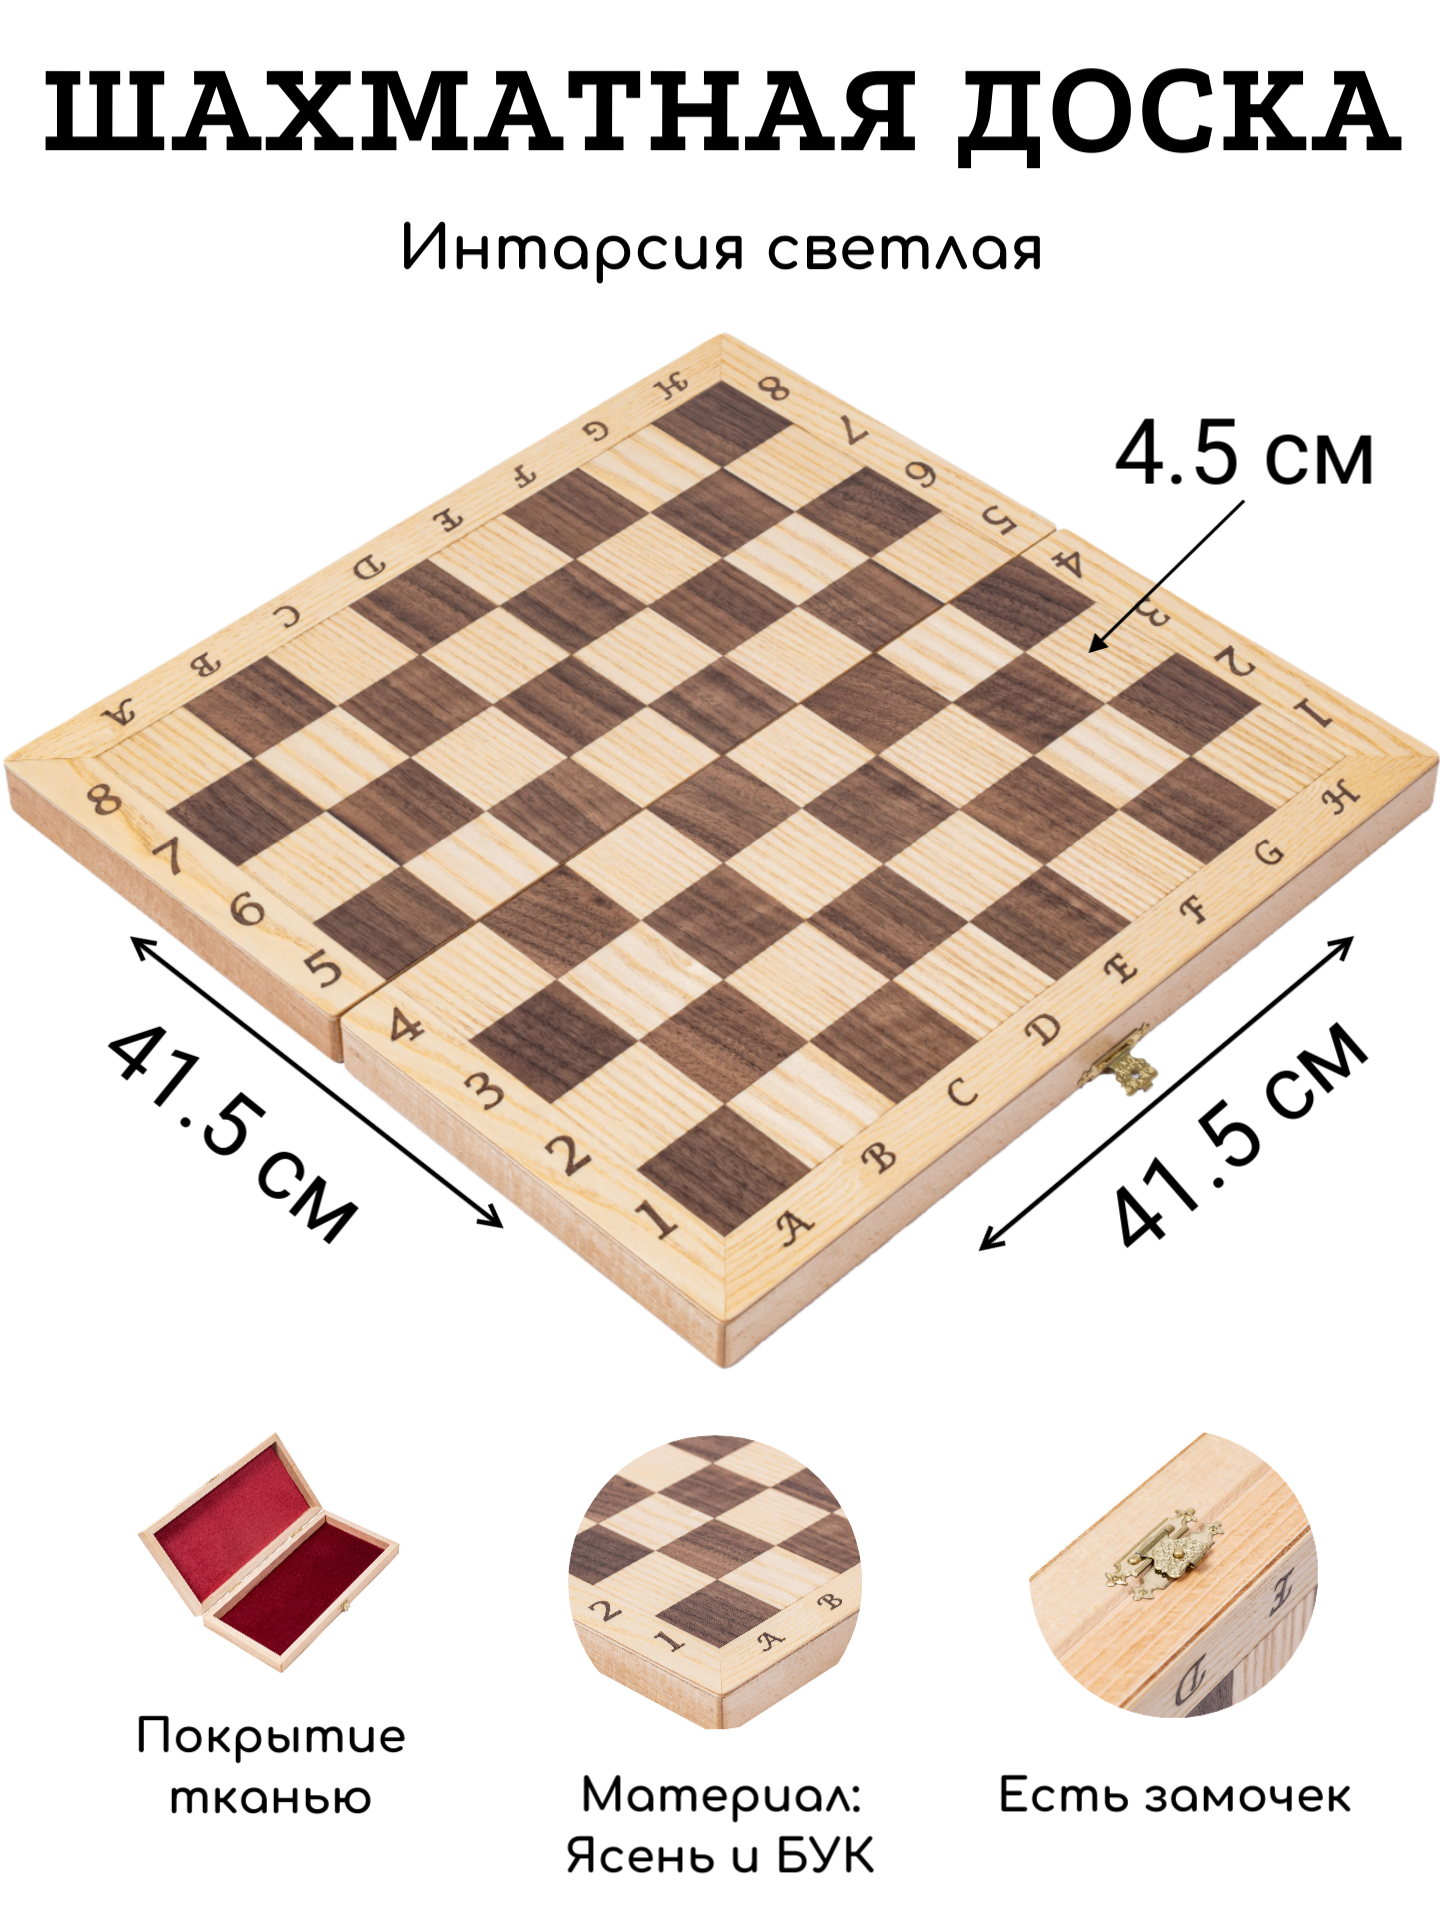 Шахматная доска без фигур Lavochkashop Турнирная 41 5 см интарсия stav042